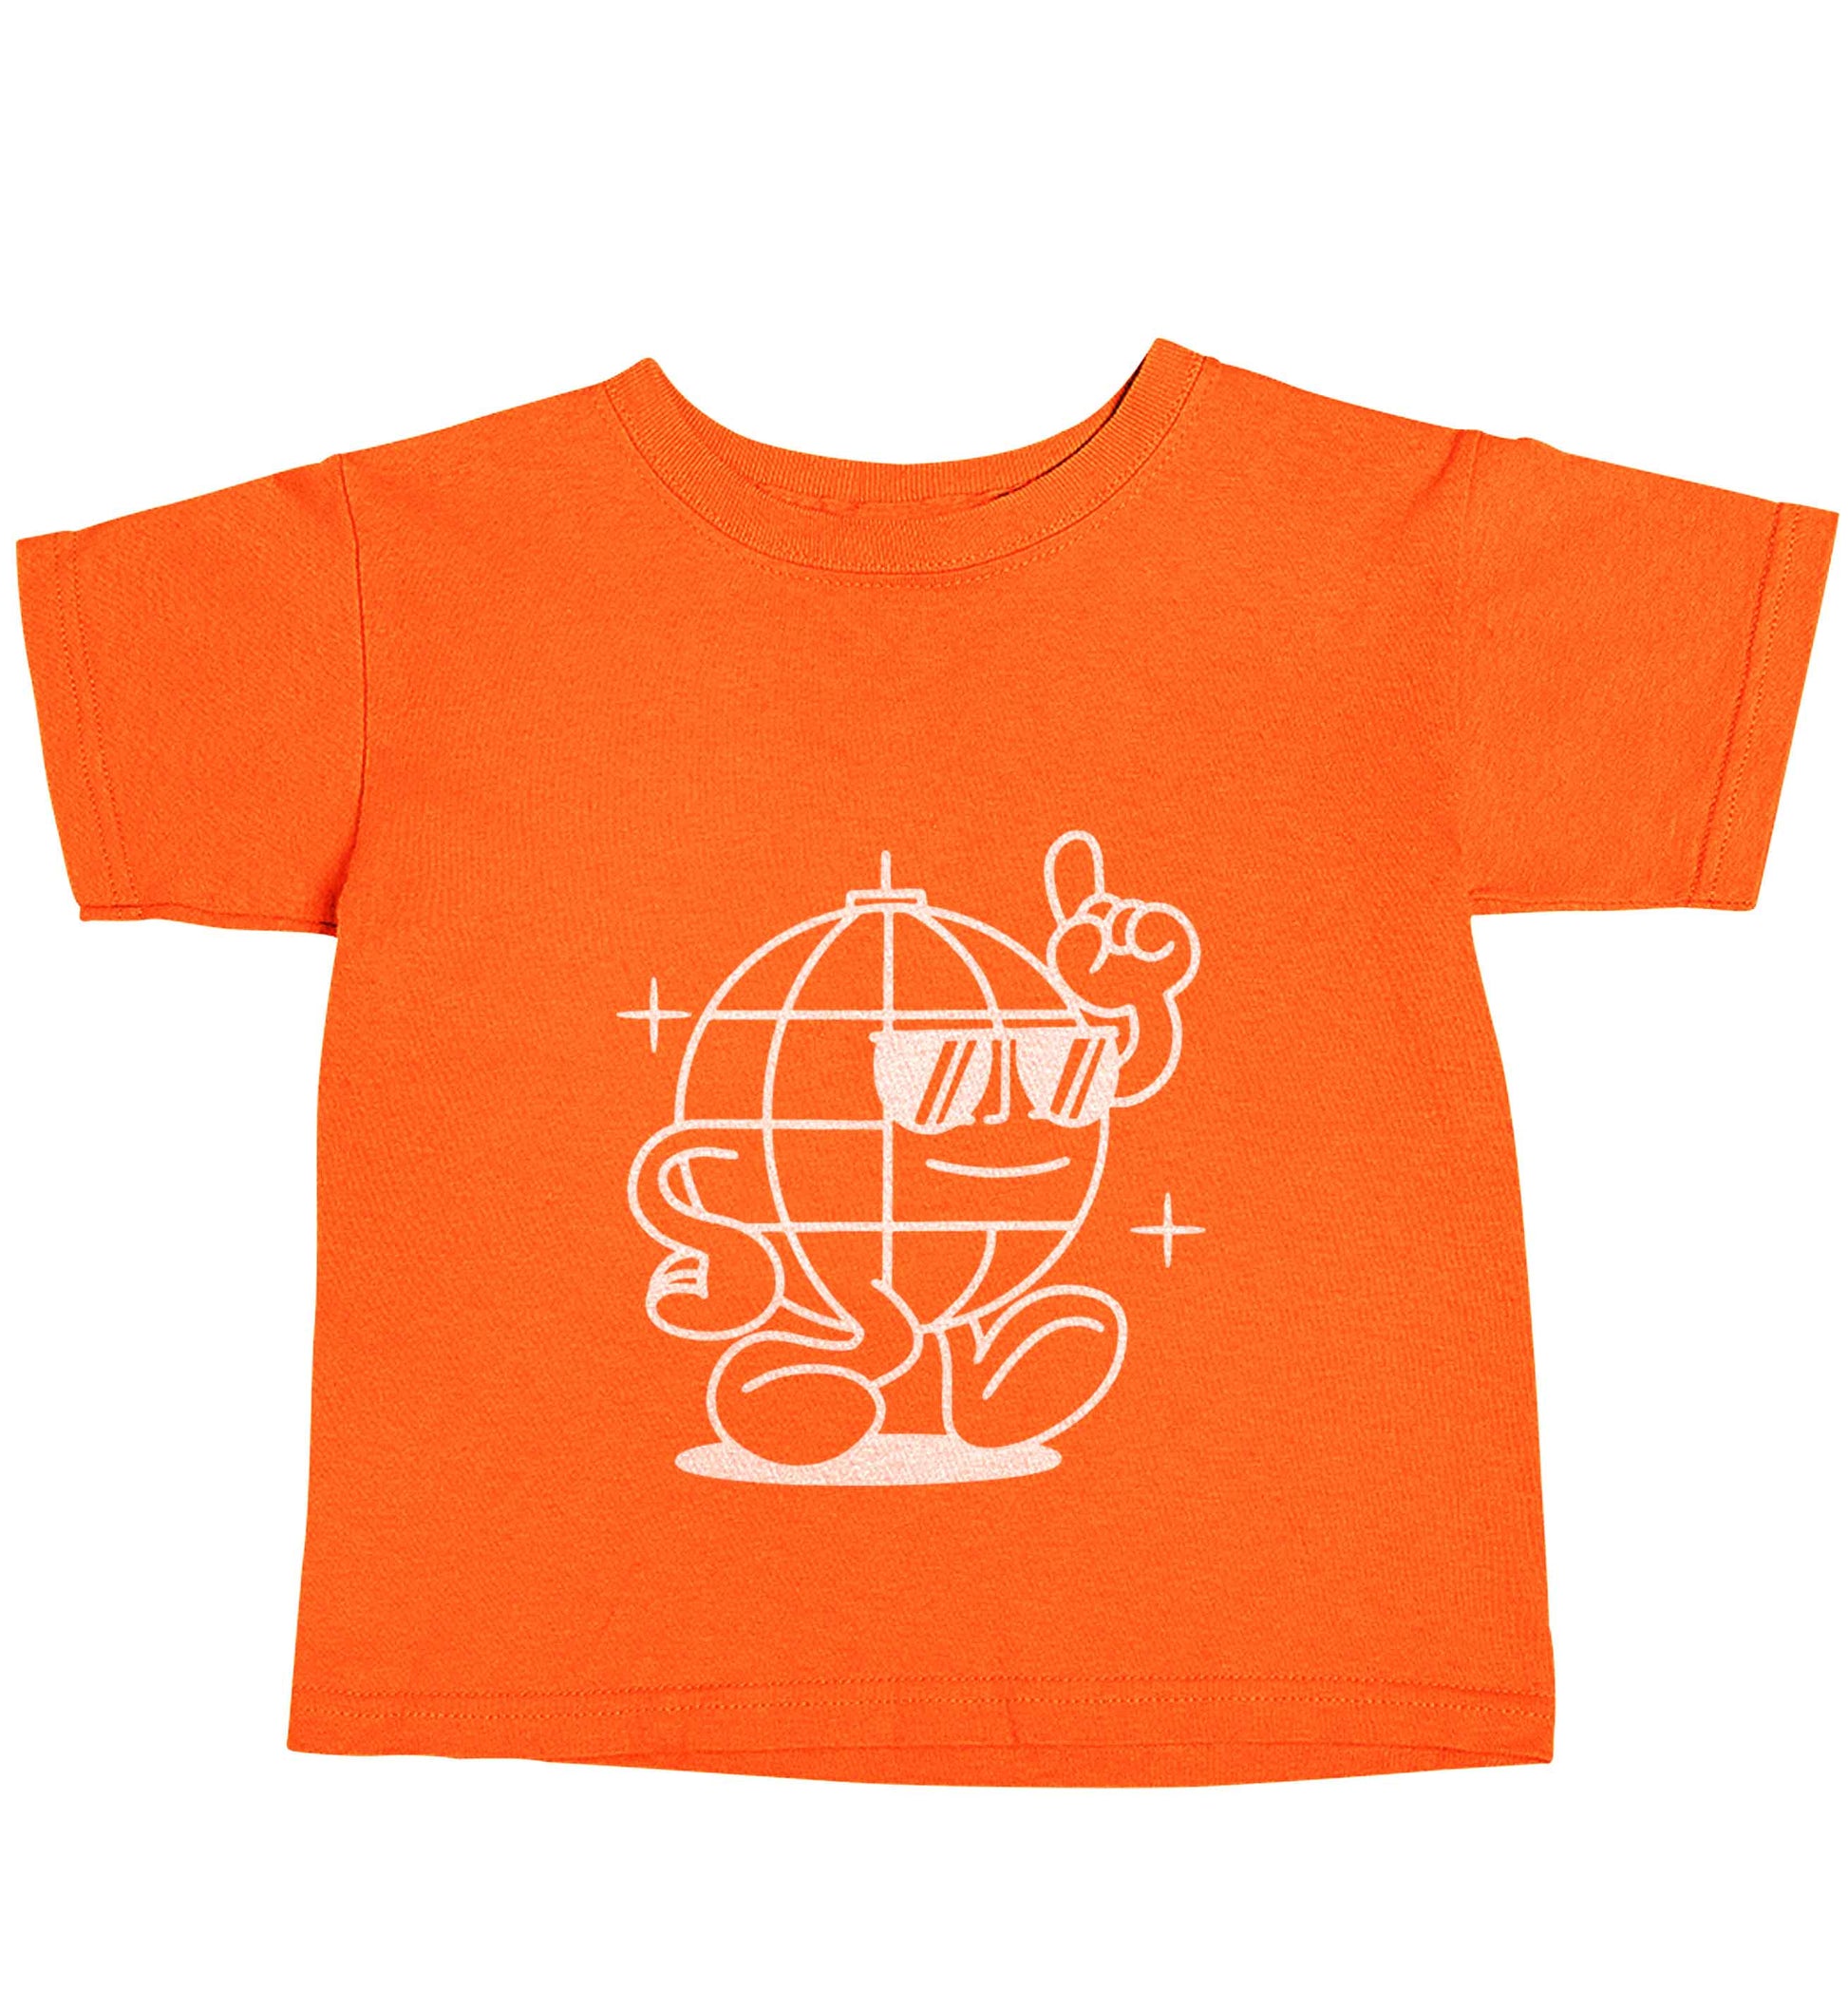 Disco ball orange baby toddler Tshirt 2 Years